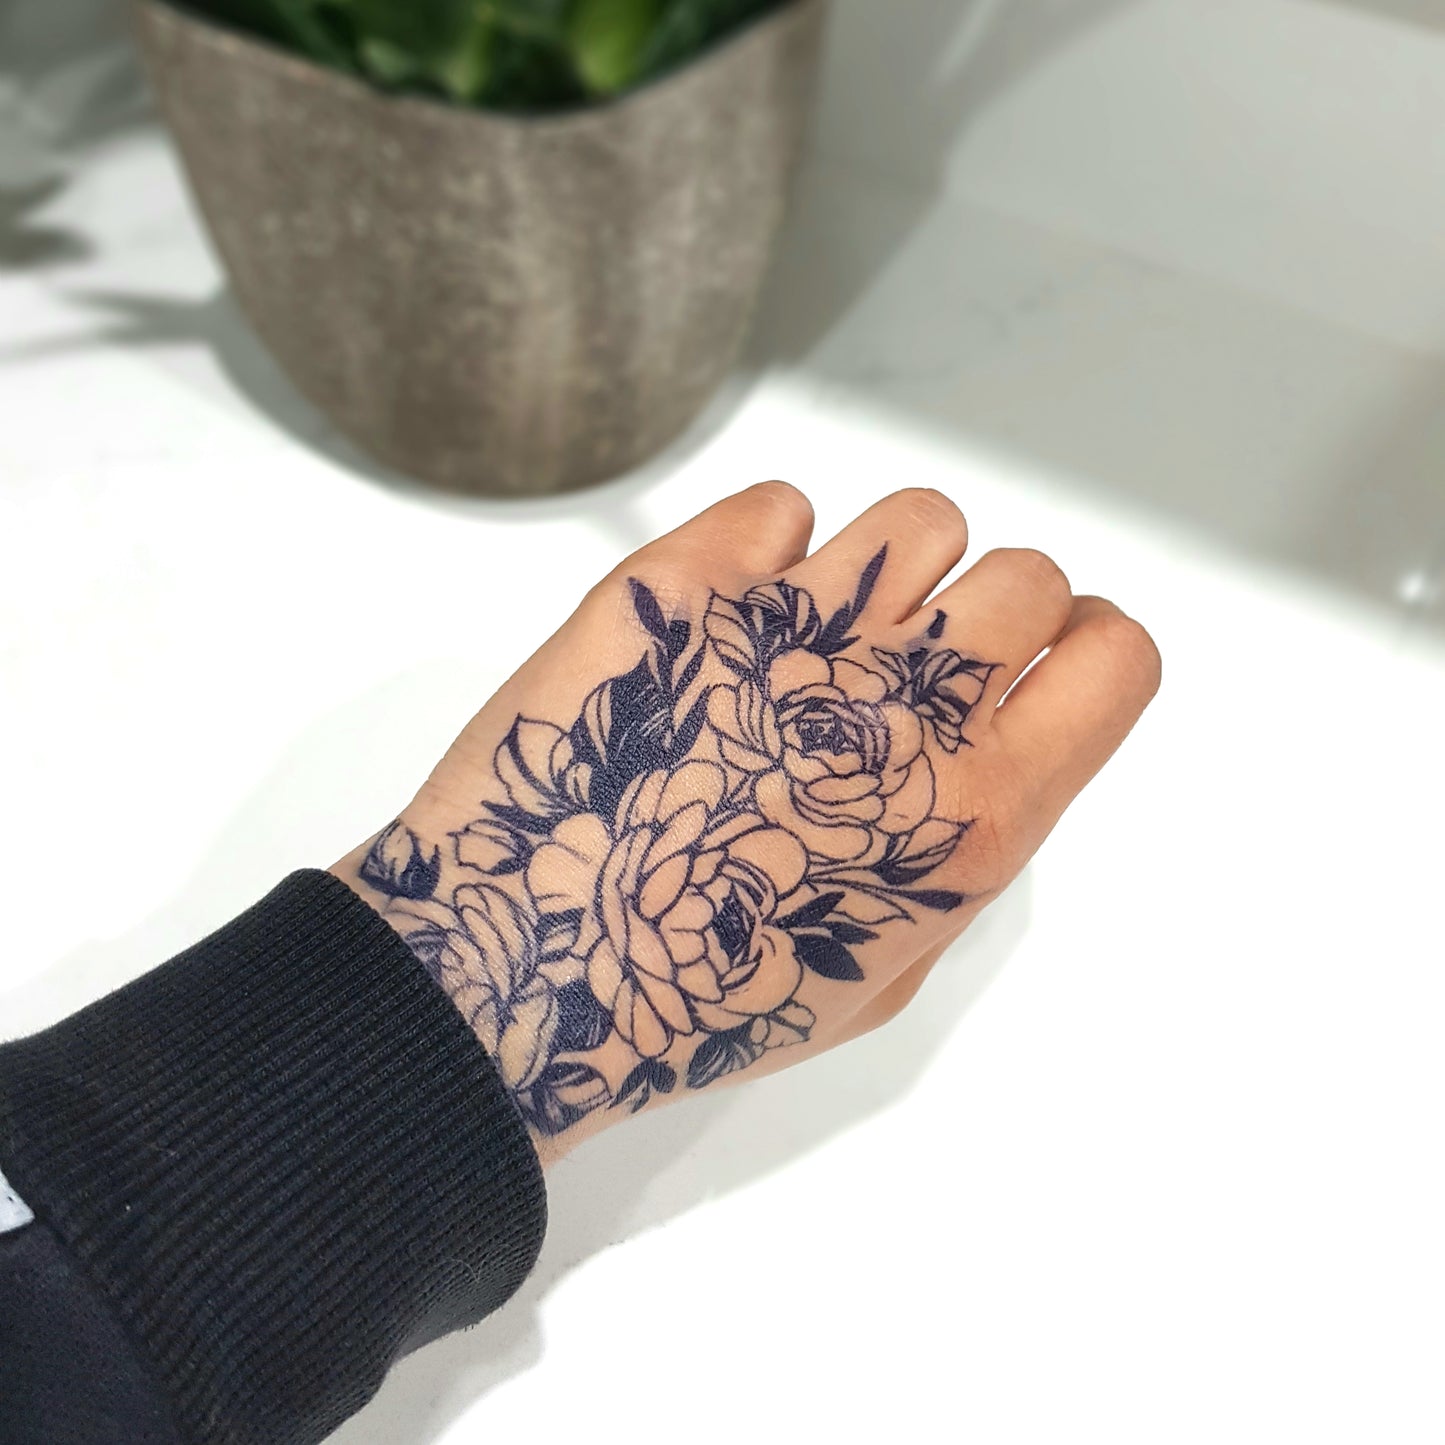 Peonies & Leaves | 100% Natural Semi-Permanent Tattoo Stain | Jagua Gel